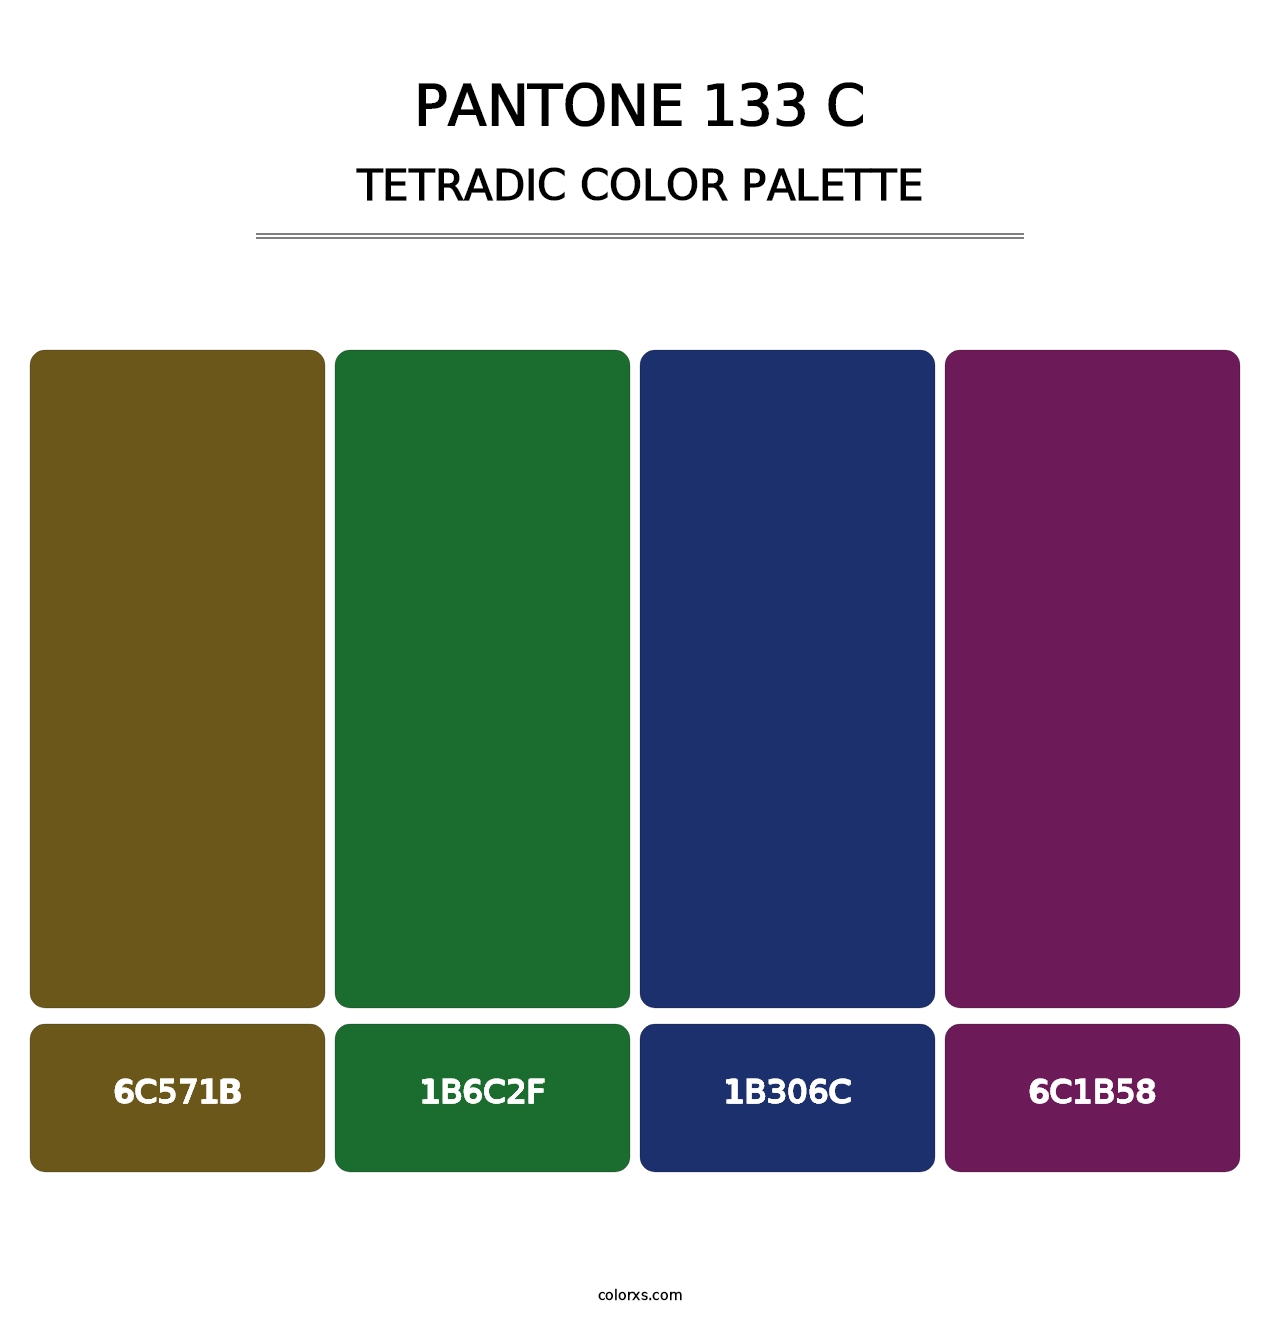 PANTONE 133 C - Tetradic Color Palette